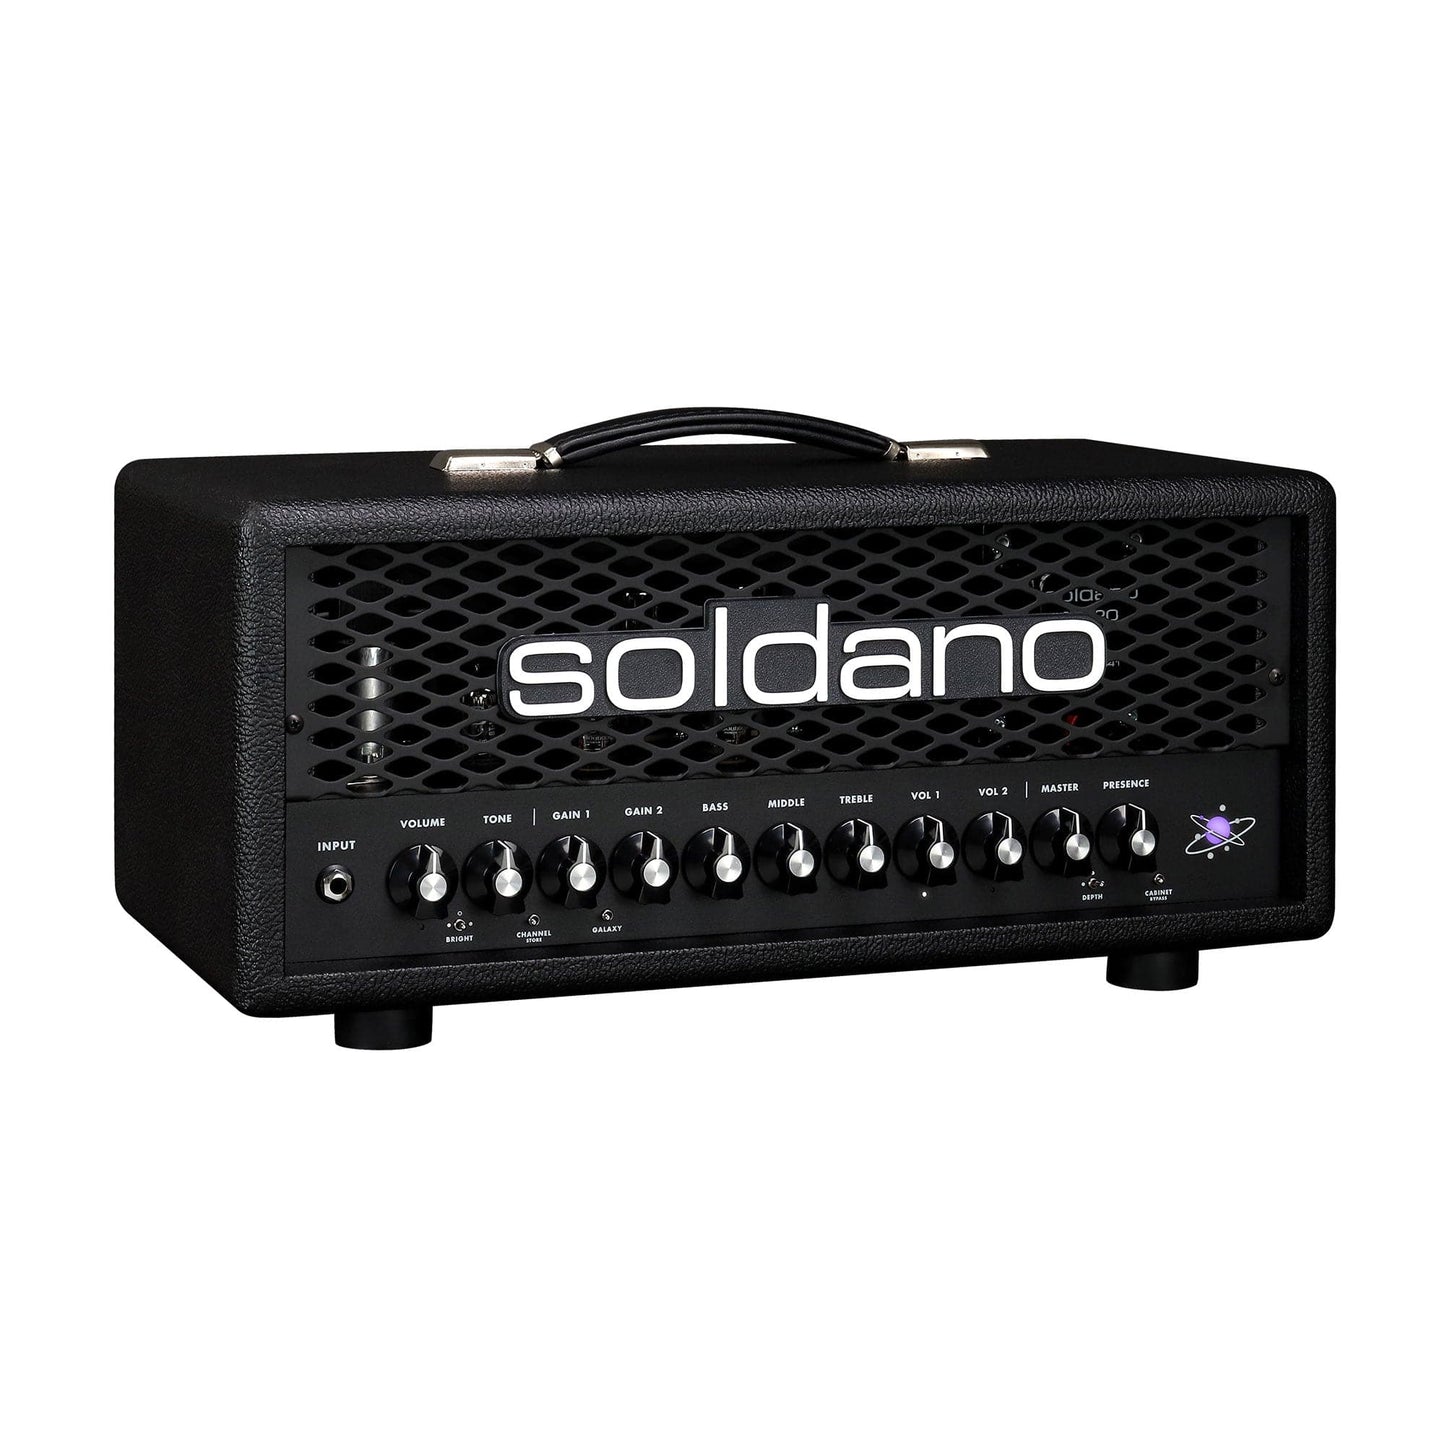 Soldano Astro 20 20w All-tube Head Amps / Guitar Heads